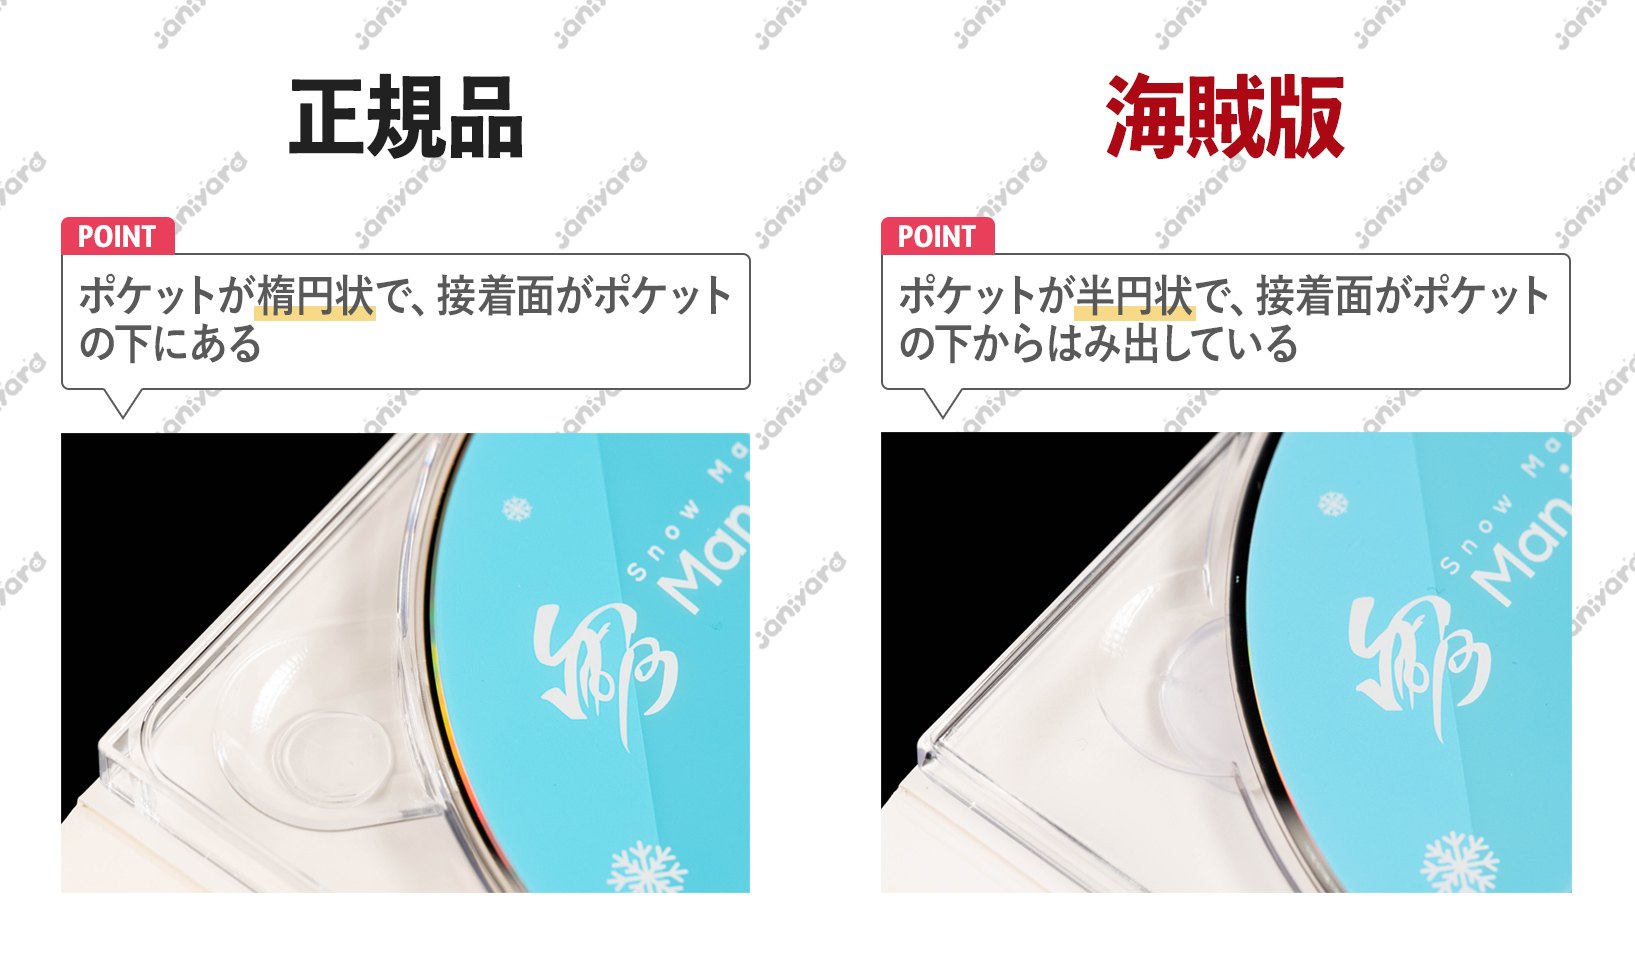 SnowMan 素顔4 正規品 ミュージック DVD/ブルーレイ 本・音楽・ゲーム 通販ネット